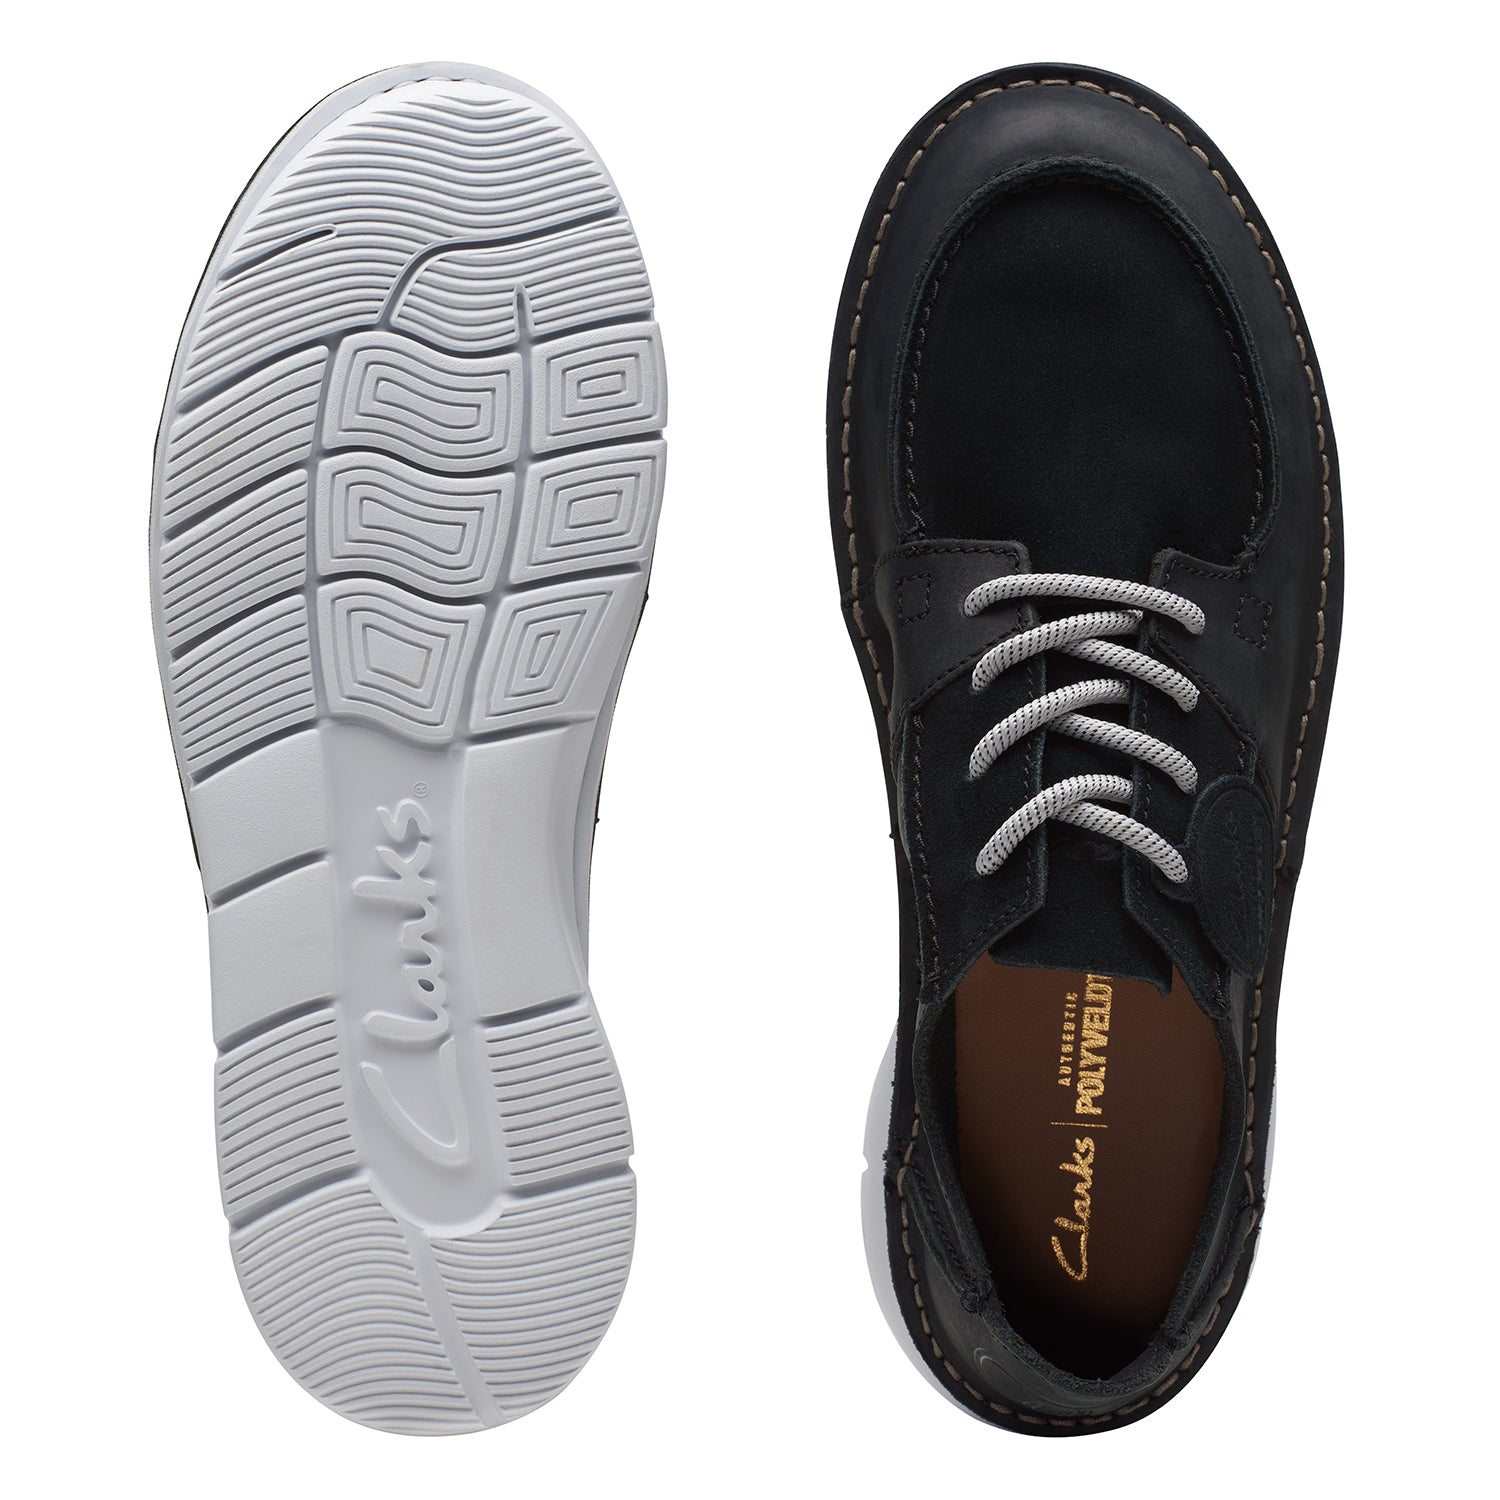 Clarks Colehill Walk Shoes - Black Combi - 261677467 - G Width (Standard Fit)